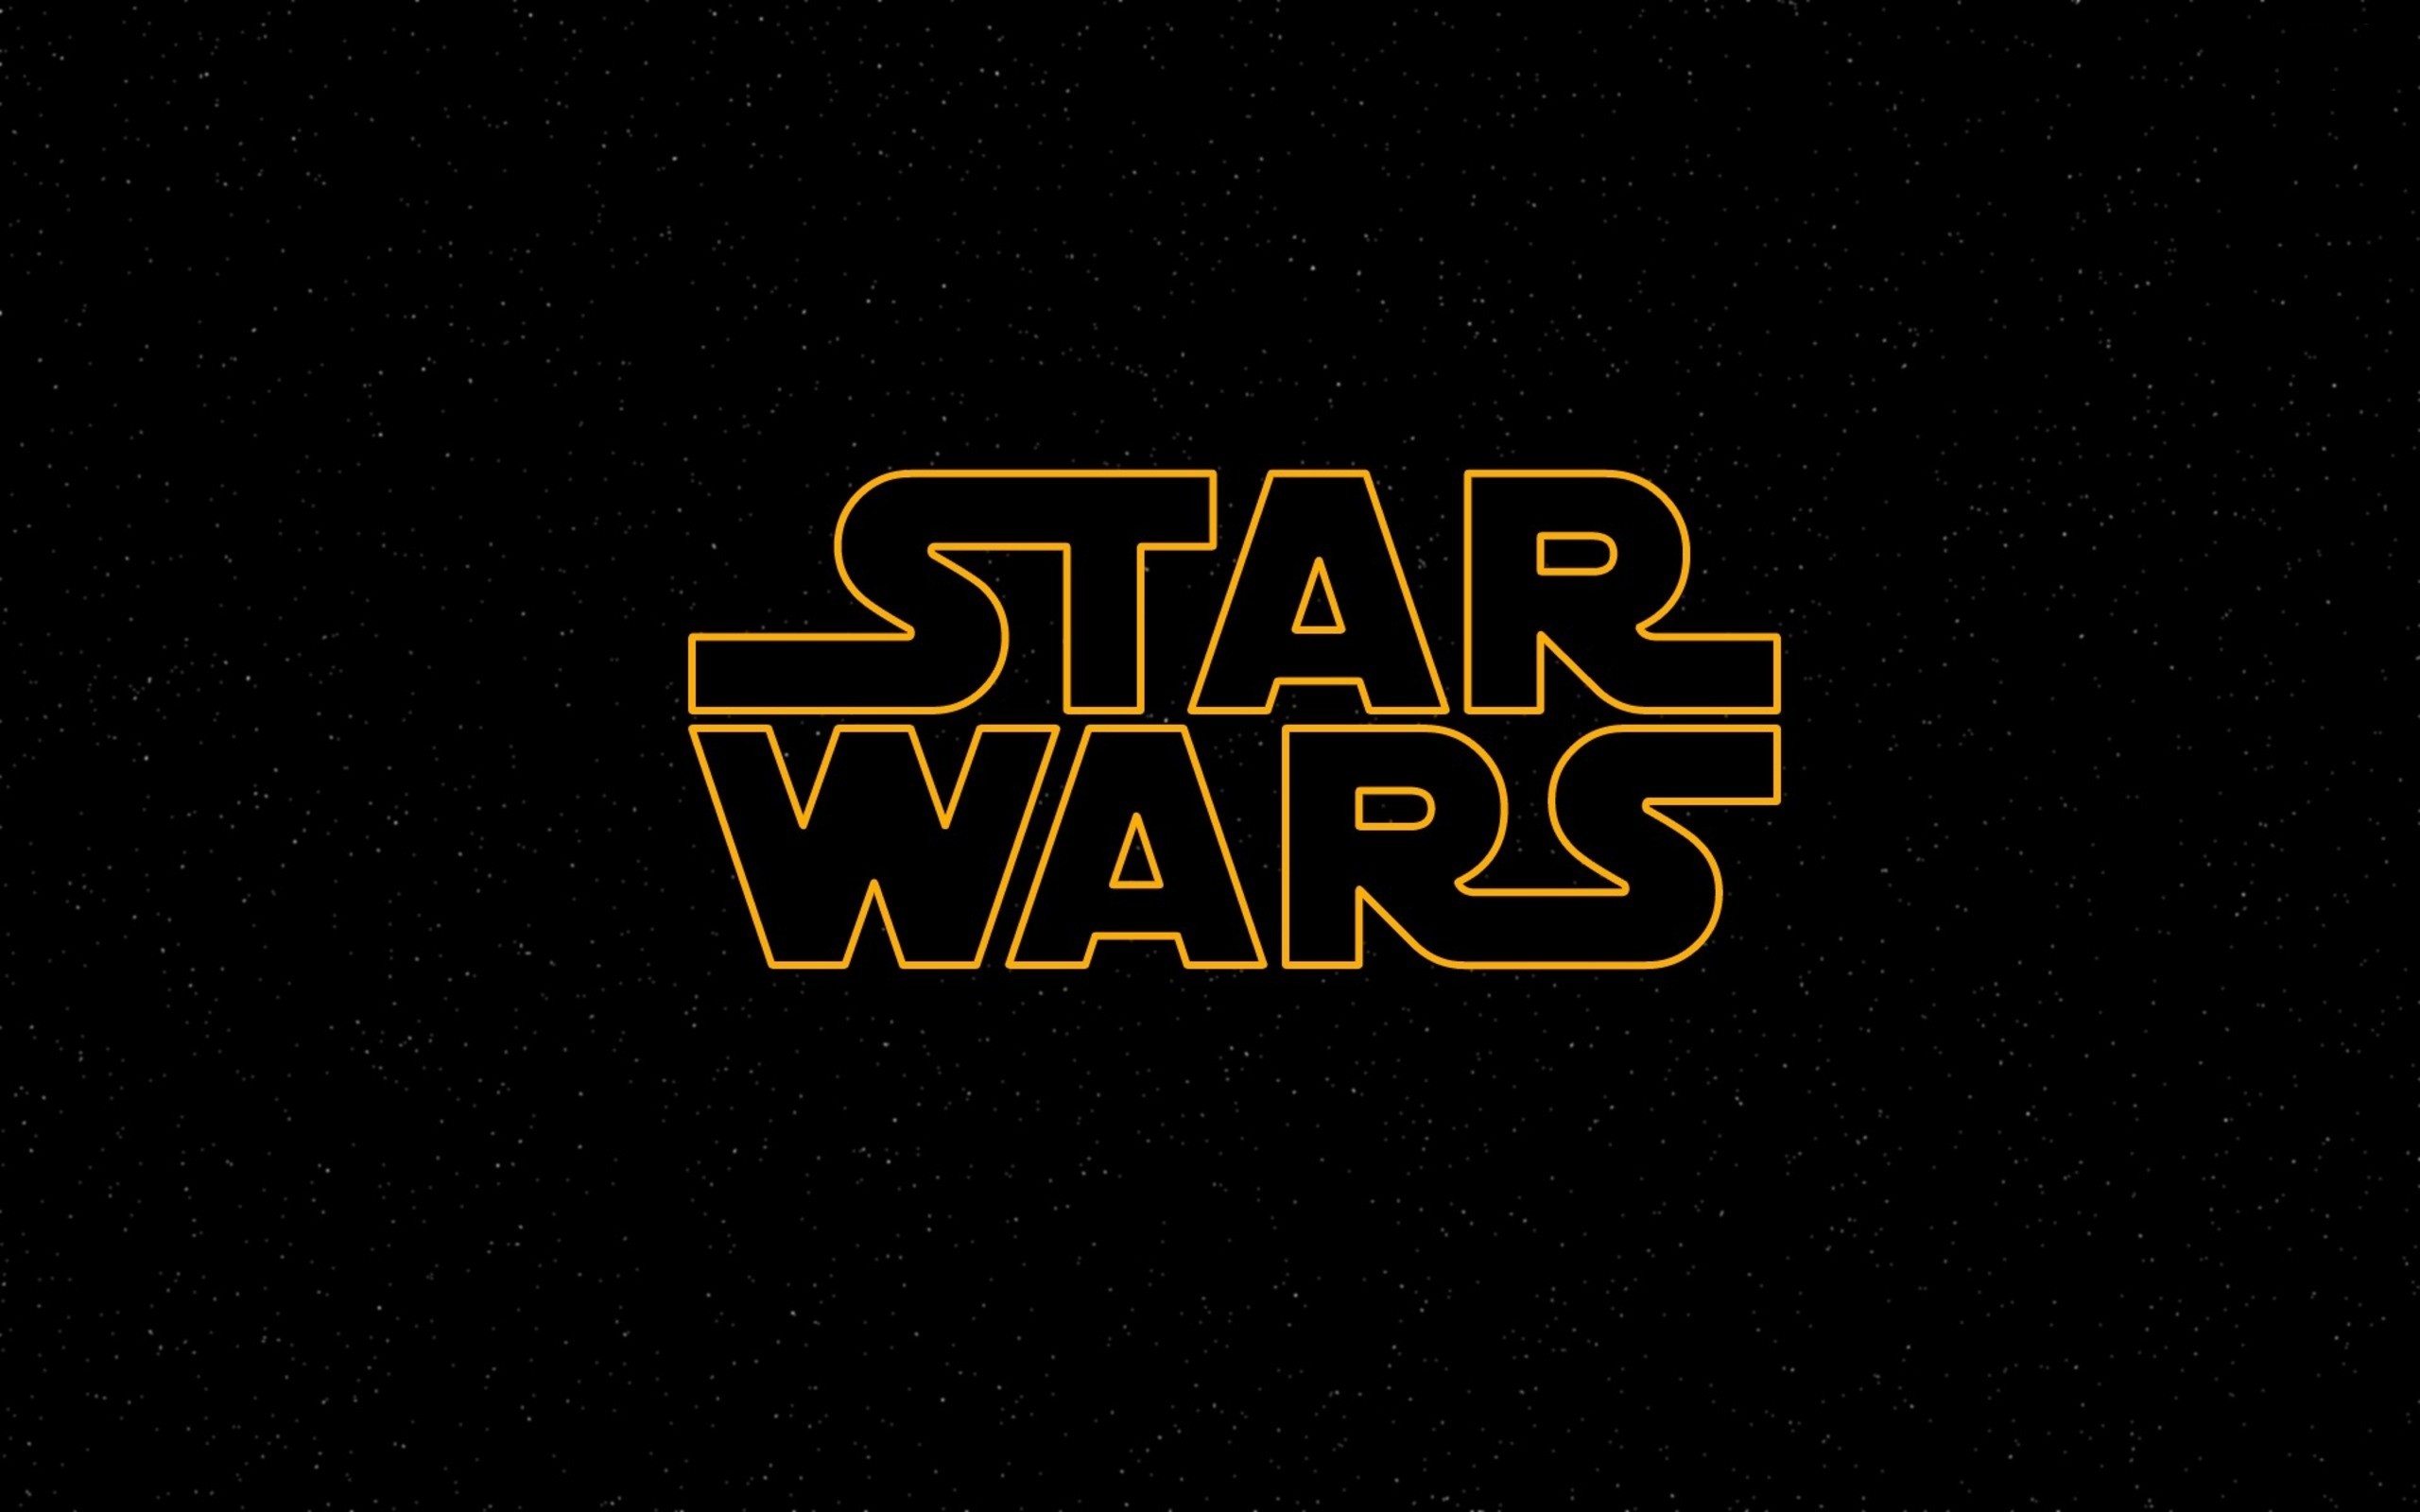 Star Wars logos black background wallpaper | 2560x1600 | 205430 ...